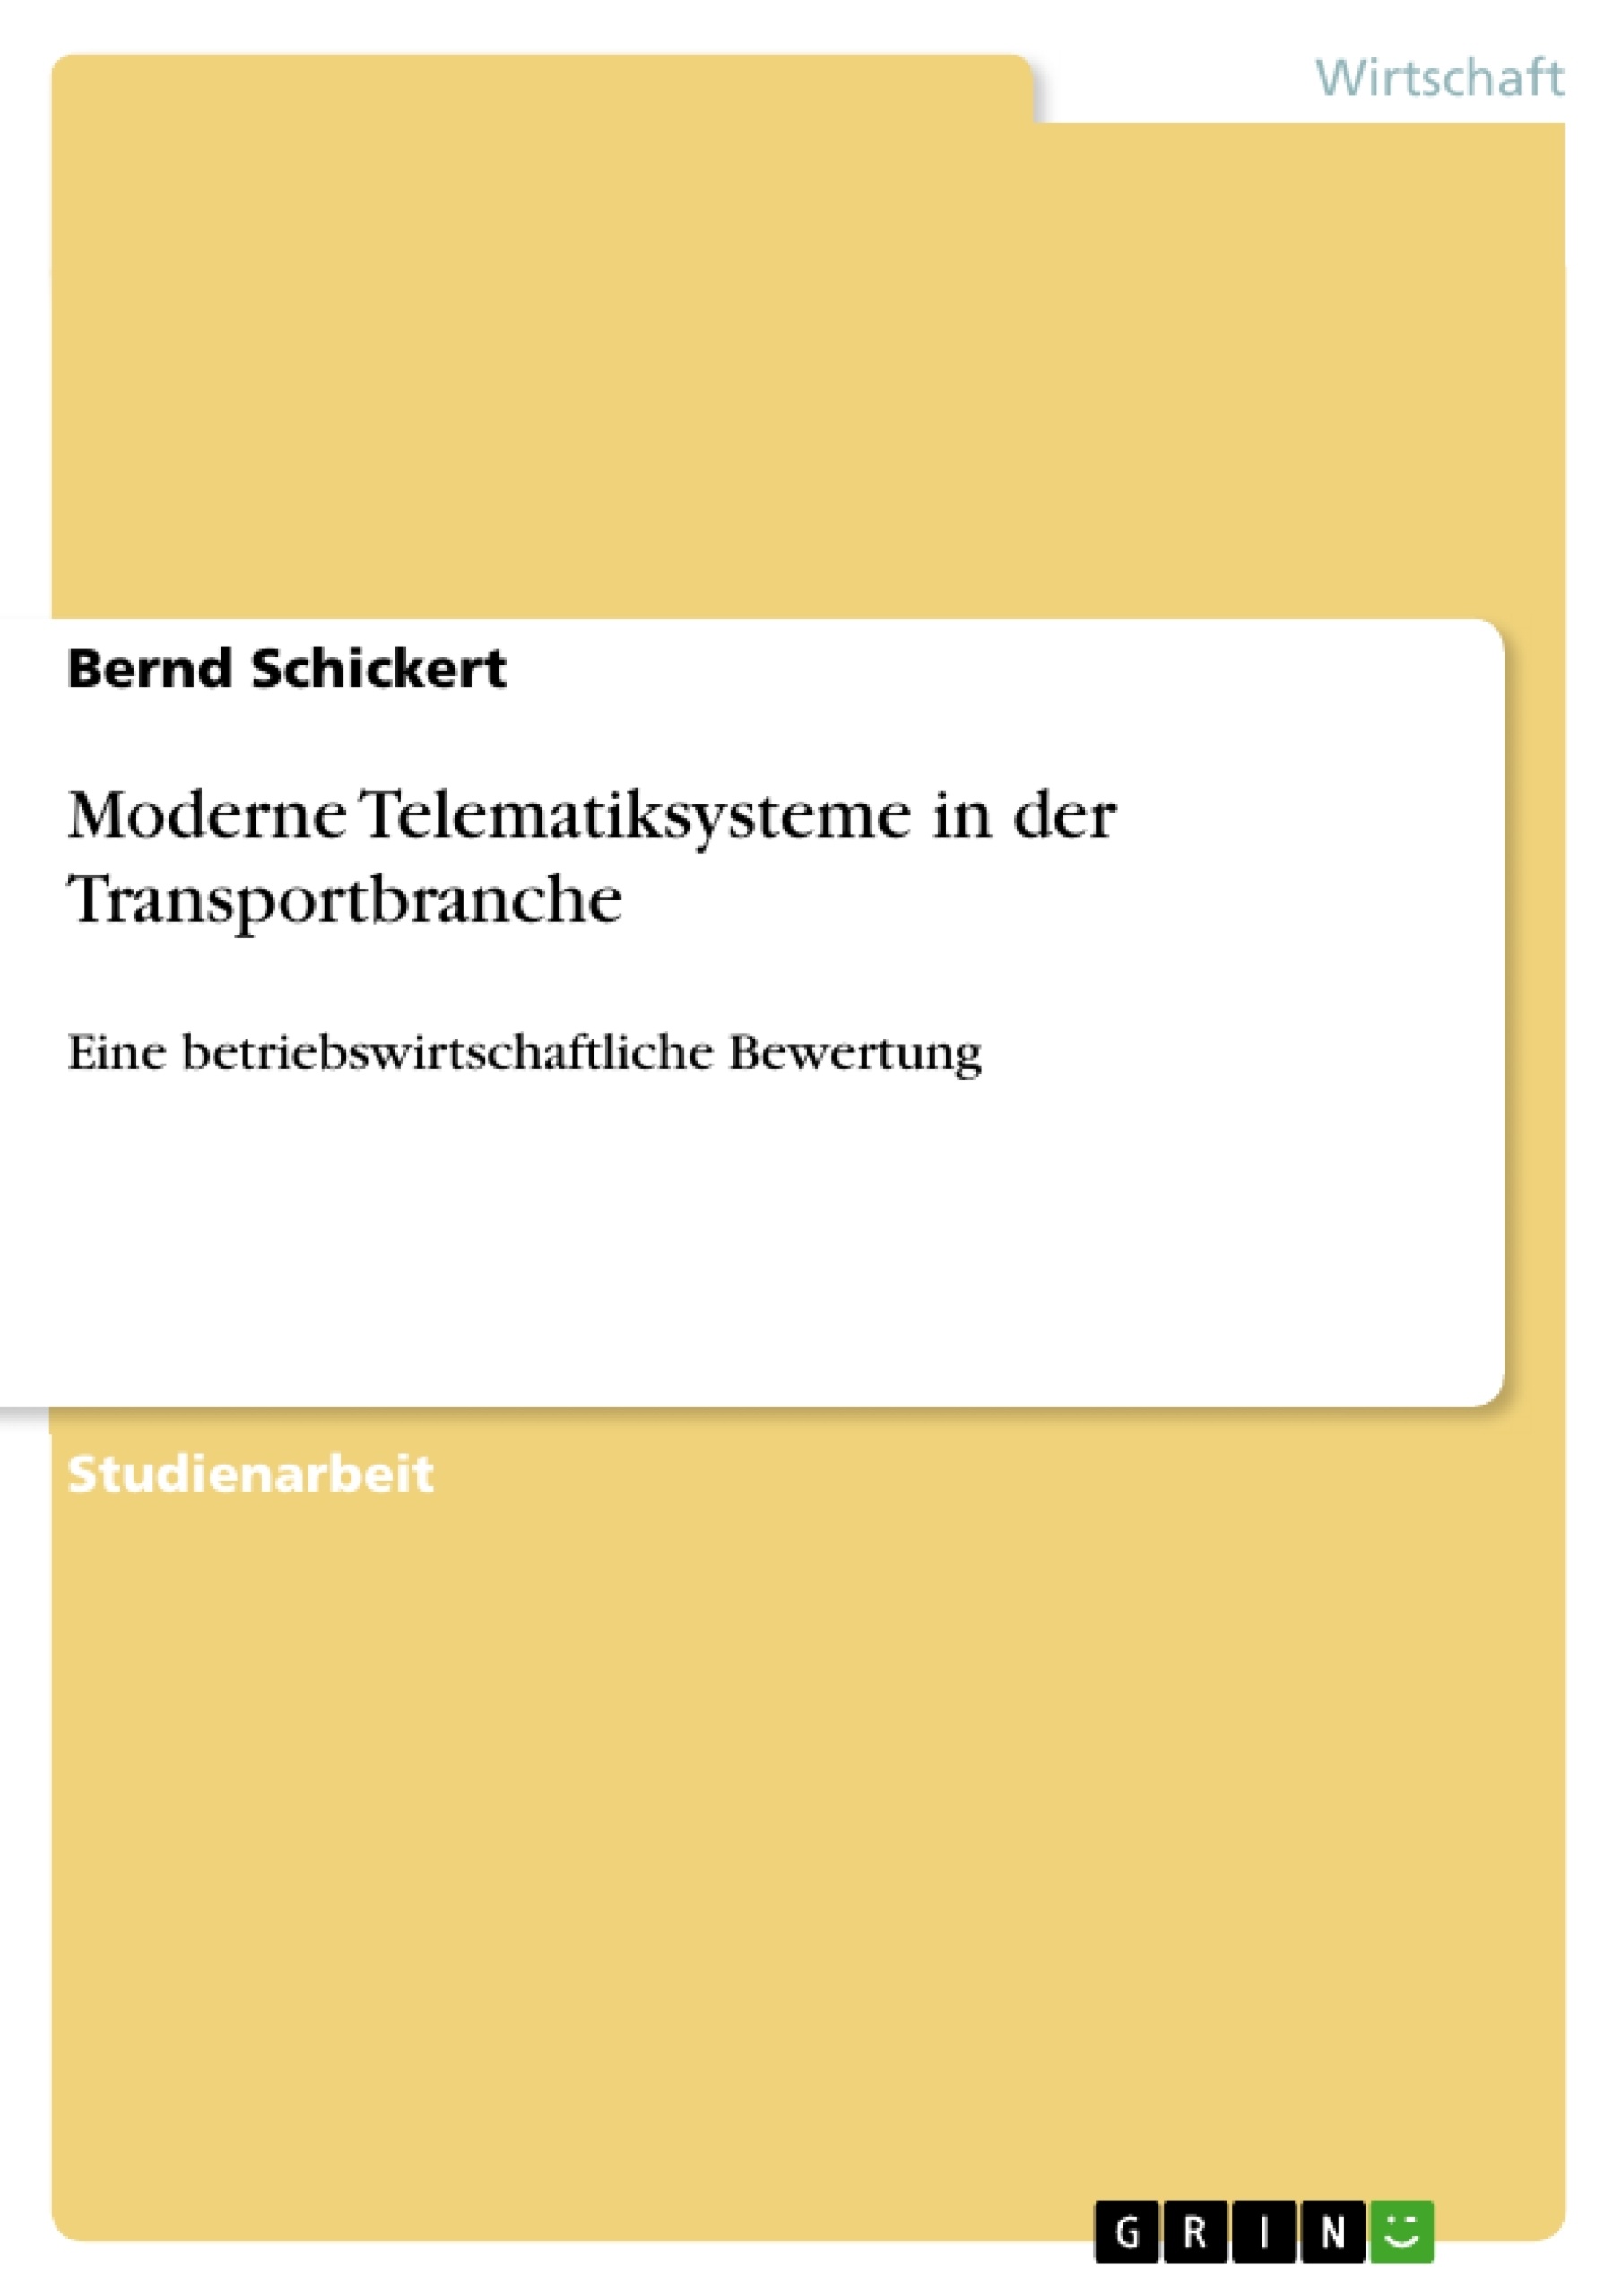 Título: Moderne Telematiksysteme in der Transportbranche